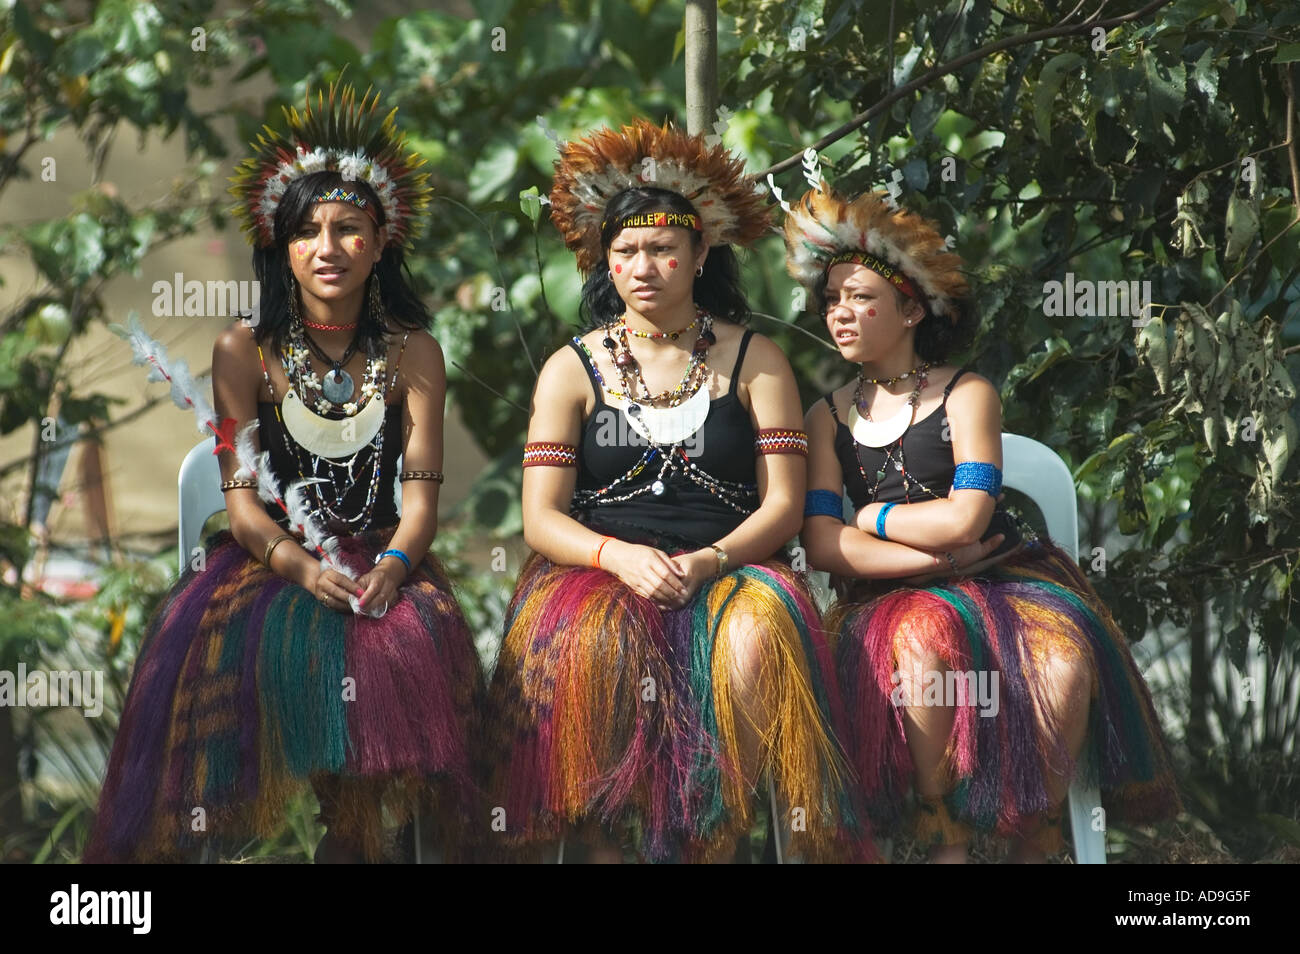 Port Moresby PNG Tanzgruppe beim ersten Personen-festival Stockfoto